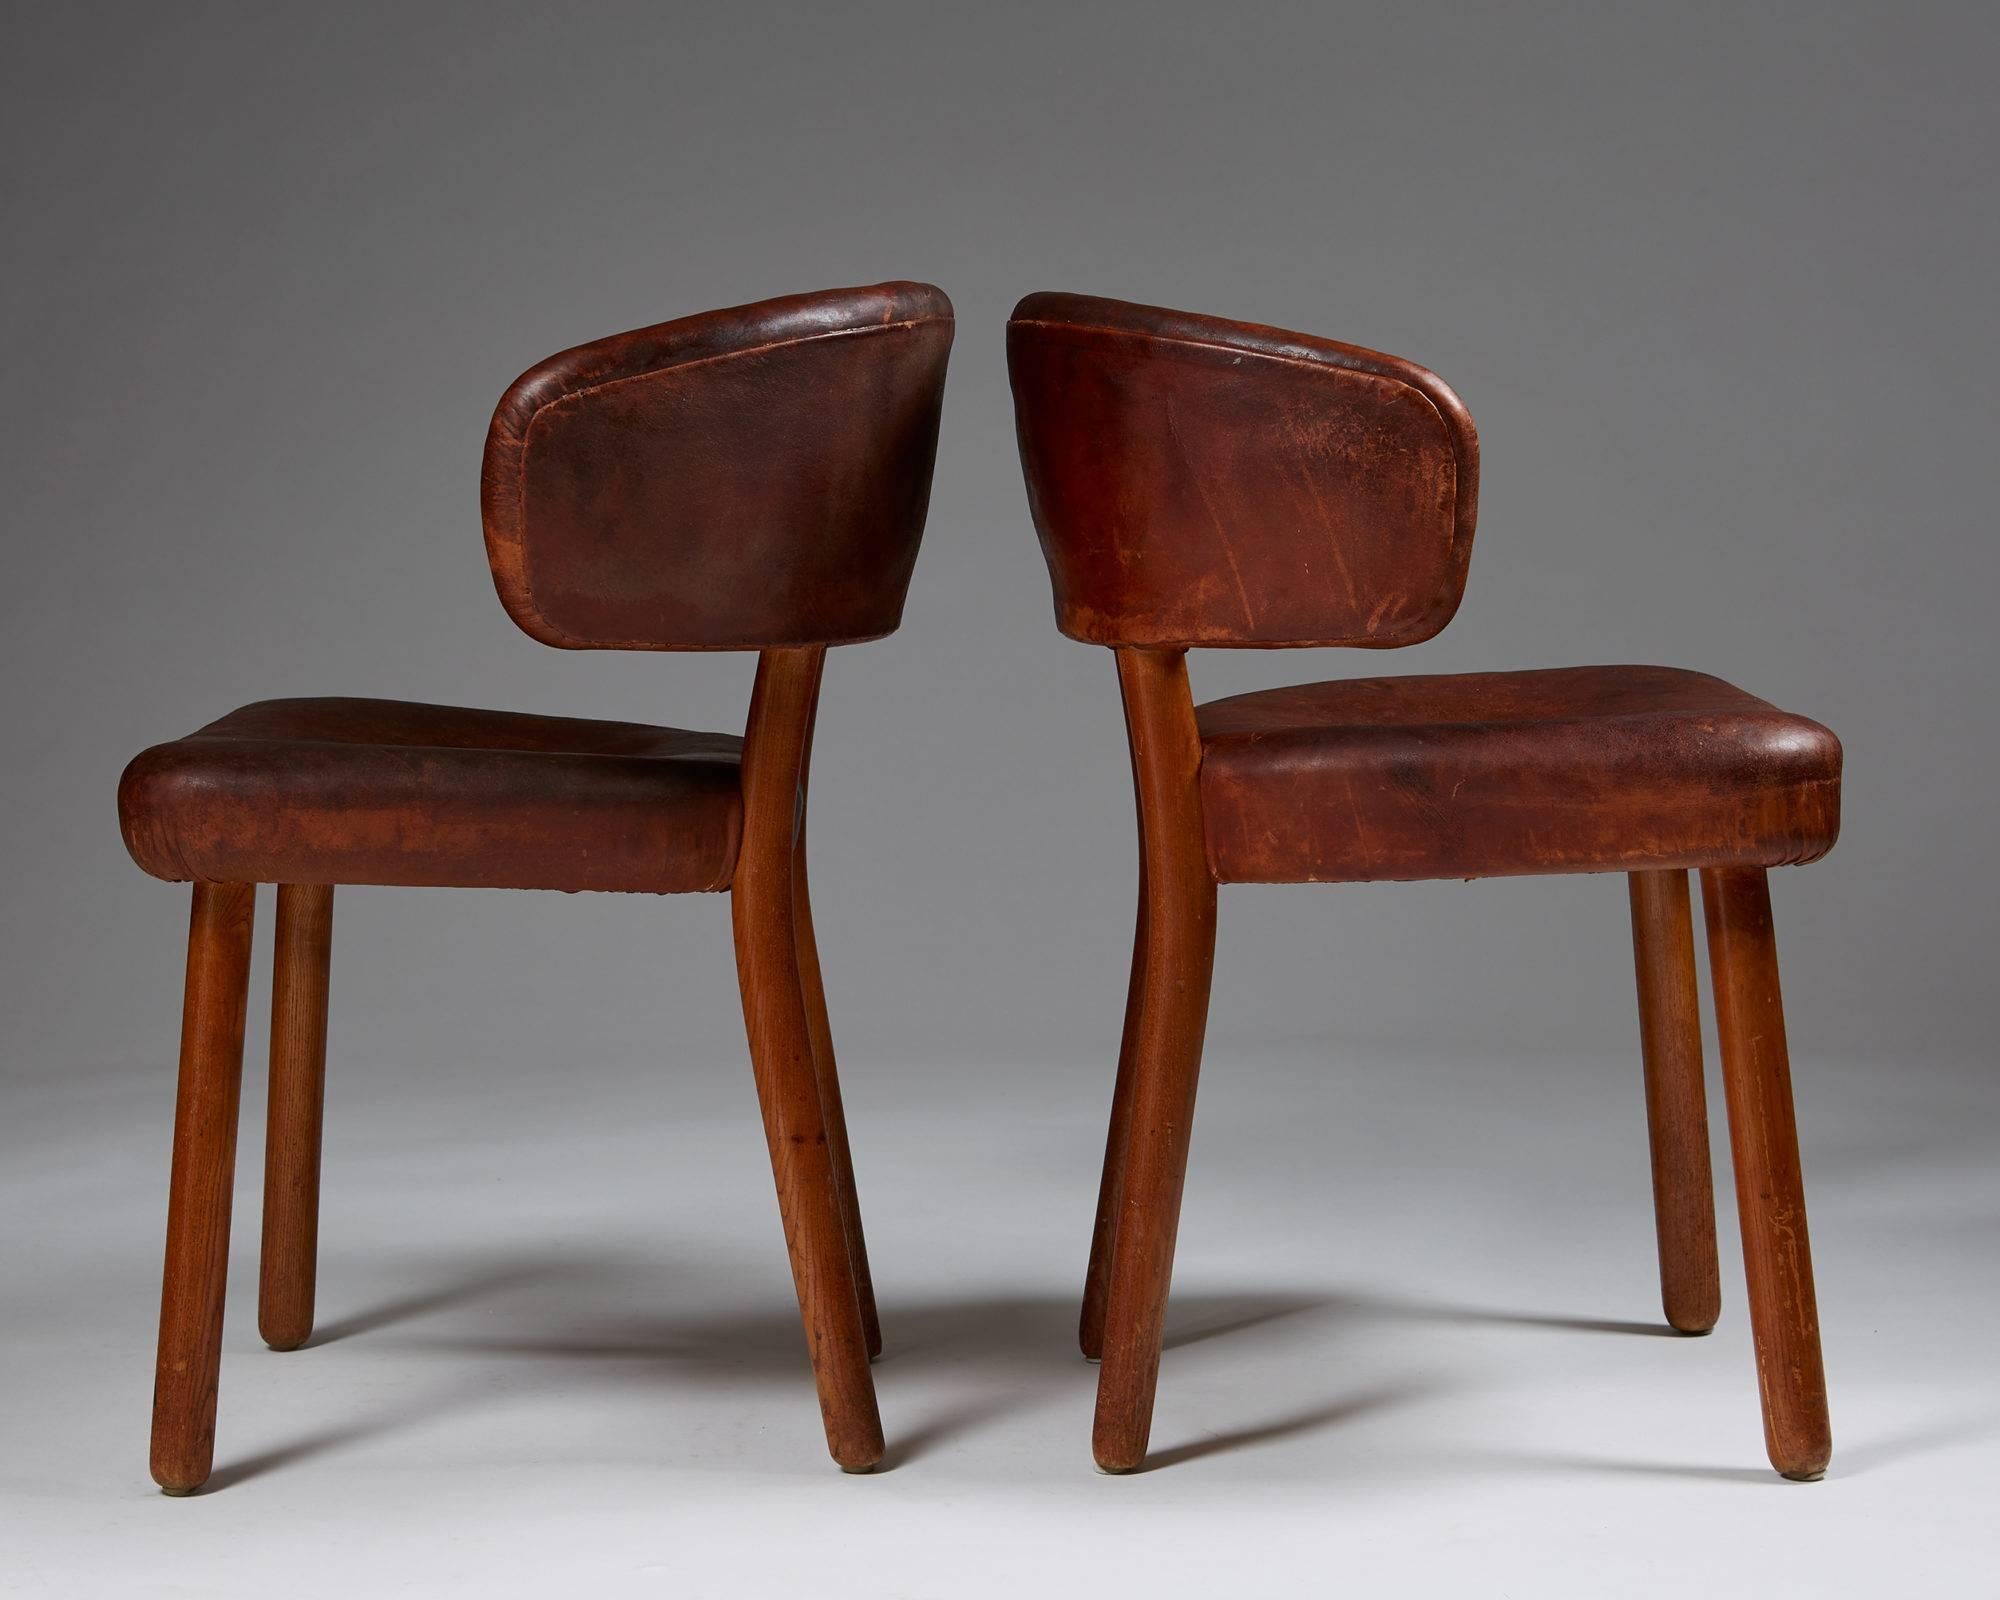 Pair of chairs designed by Hans-Christian Hansen and Viggo Jörgensen for Johannes Hansen, Denmark. 1936.
Ash legs with original cognac leather.

This model presented at the Danish Carpenter's Guild Exhibition, Copenhagen, 1936.
The model was